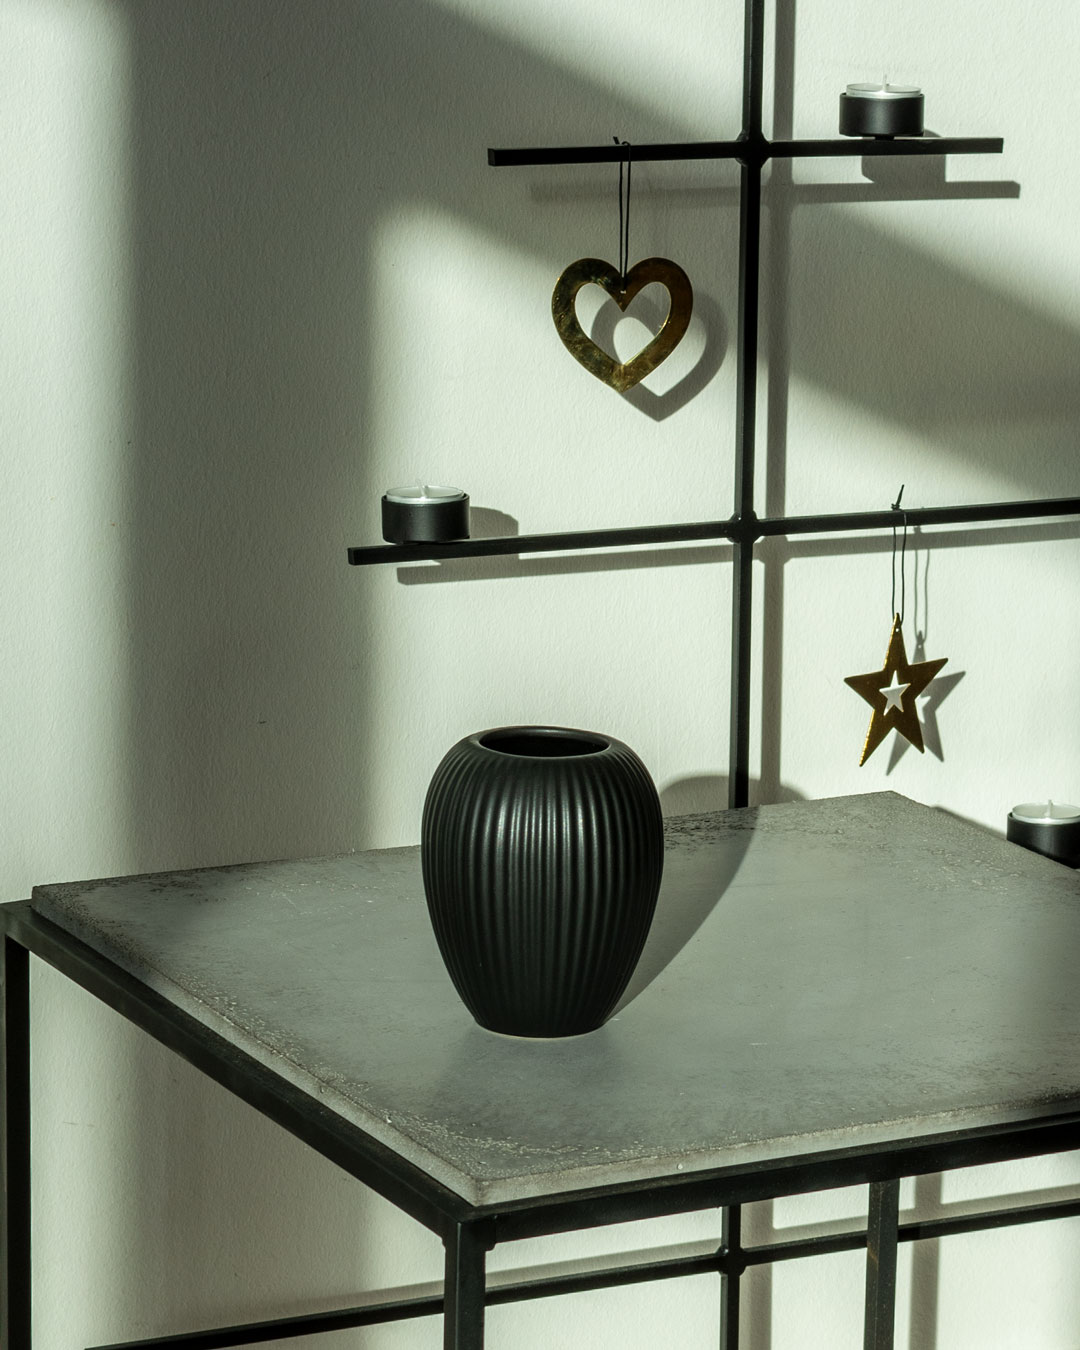 Lille sort vase fra Michael Andersen Keramik Model 4767 på lavt betonbord med stærk sol og skygger